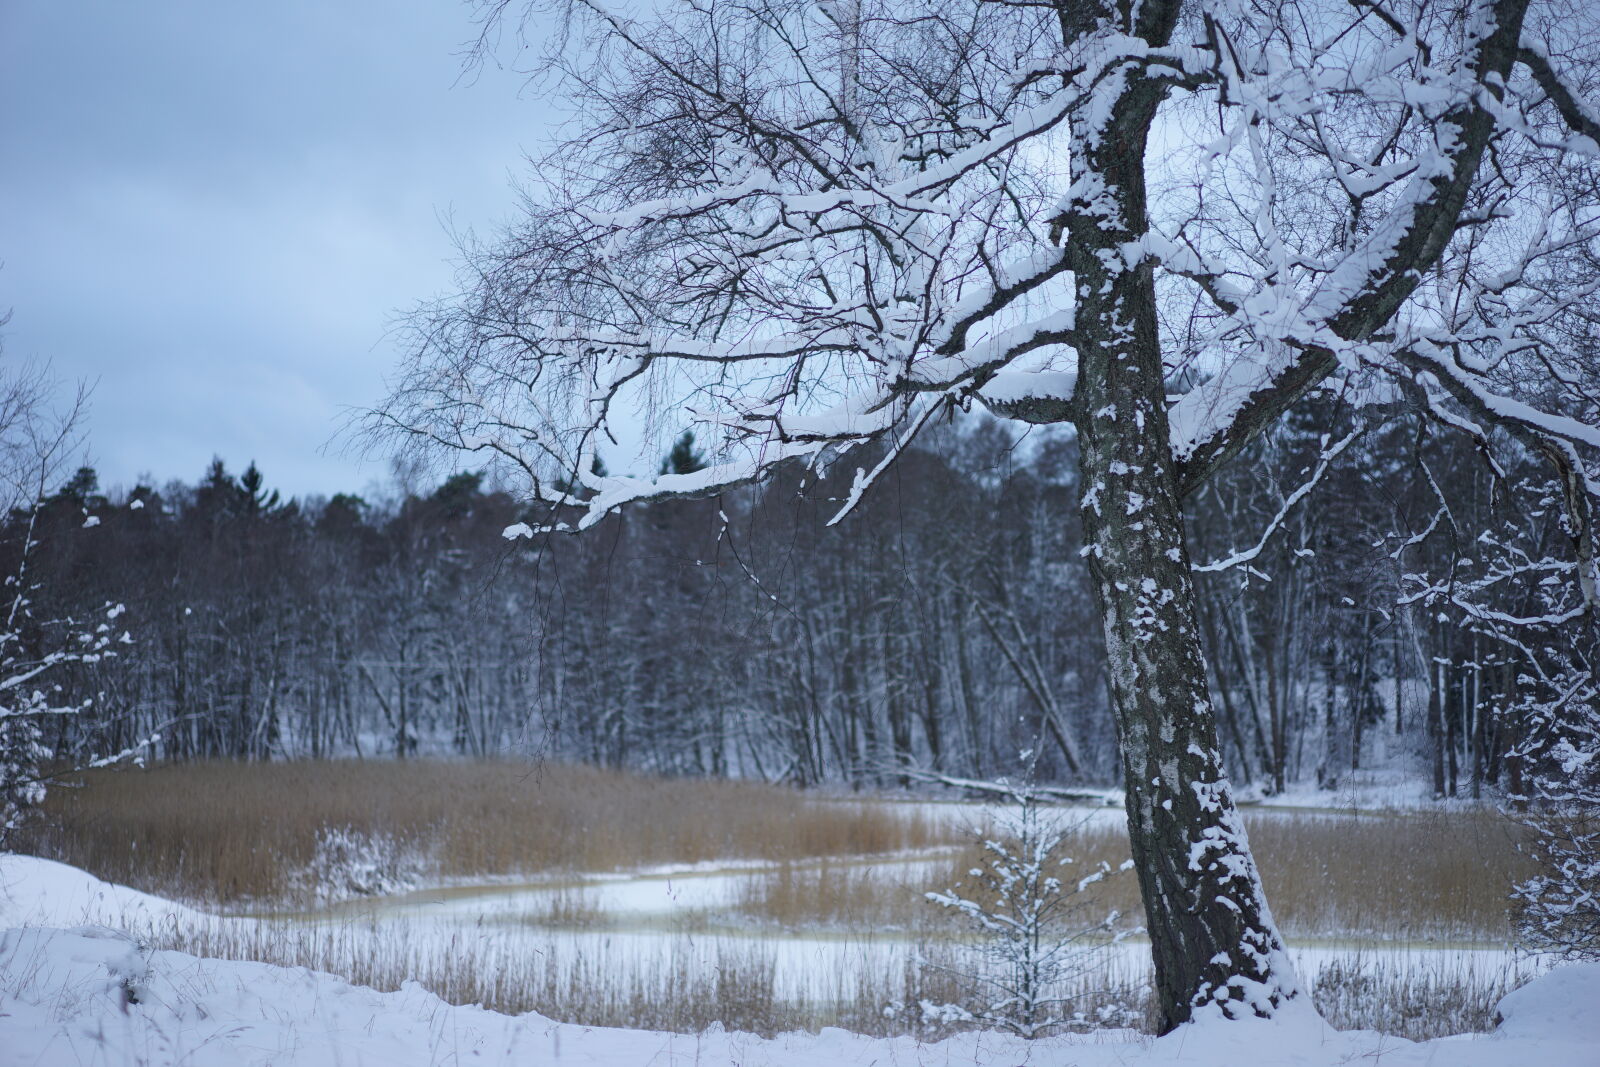 Sony a7 II sample photo. Winter wonderland scenery photography